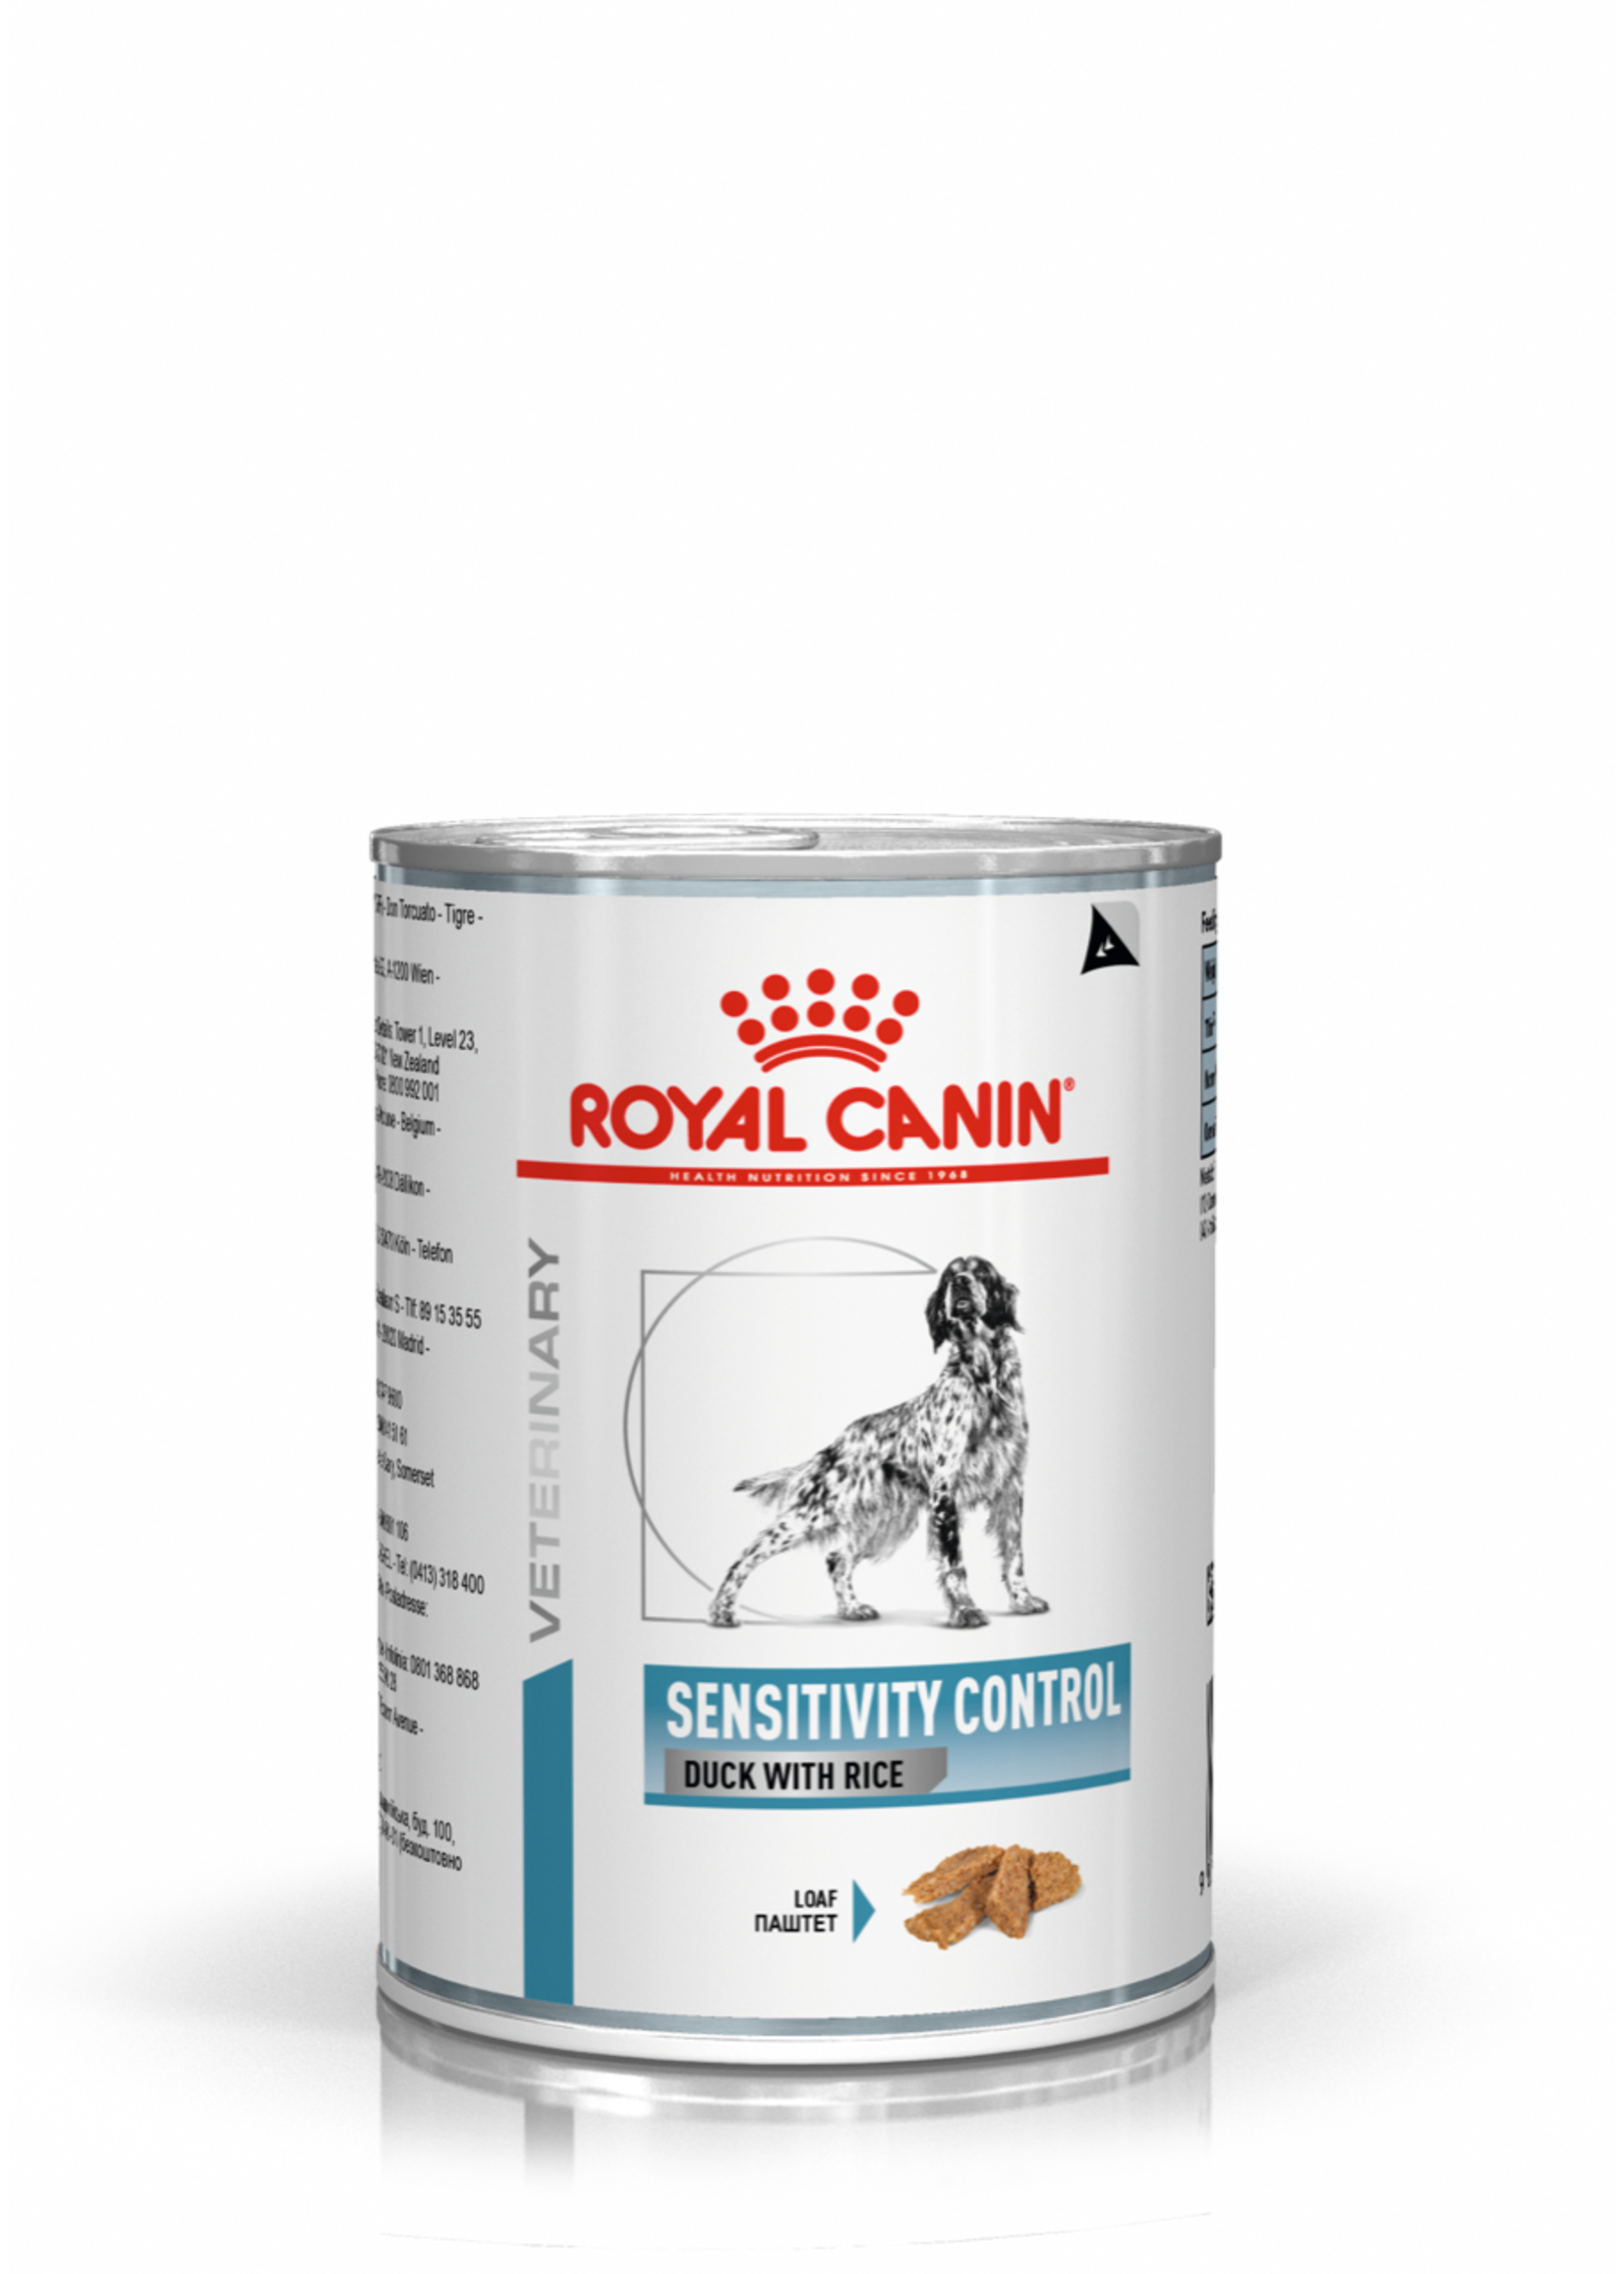 Royal Canin Royal Canin Sensitivityy Control Hund Ente 12x410gr